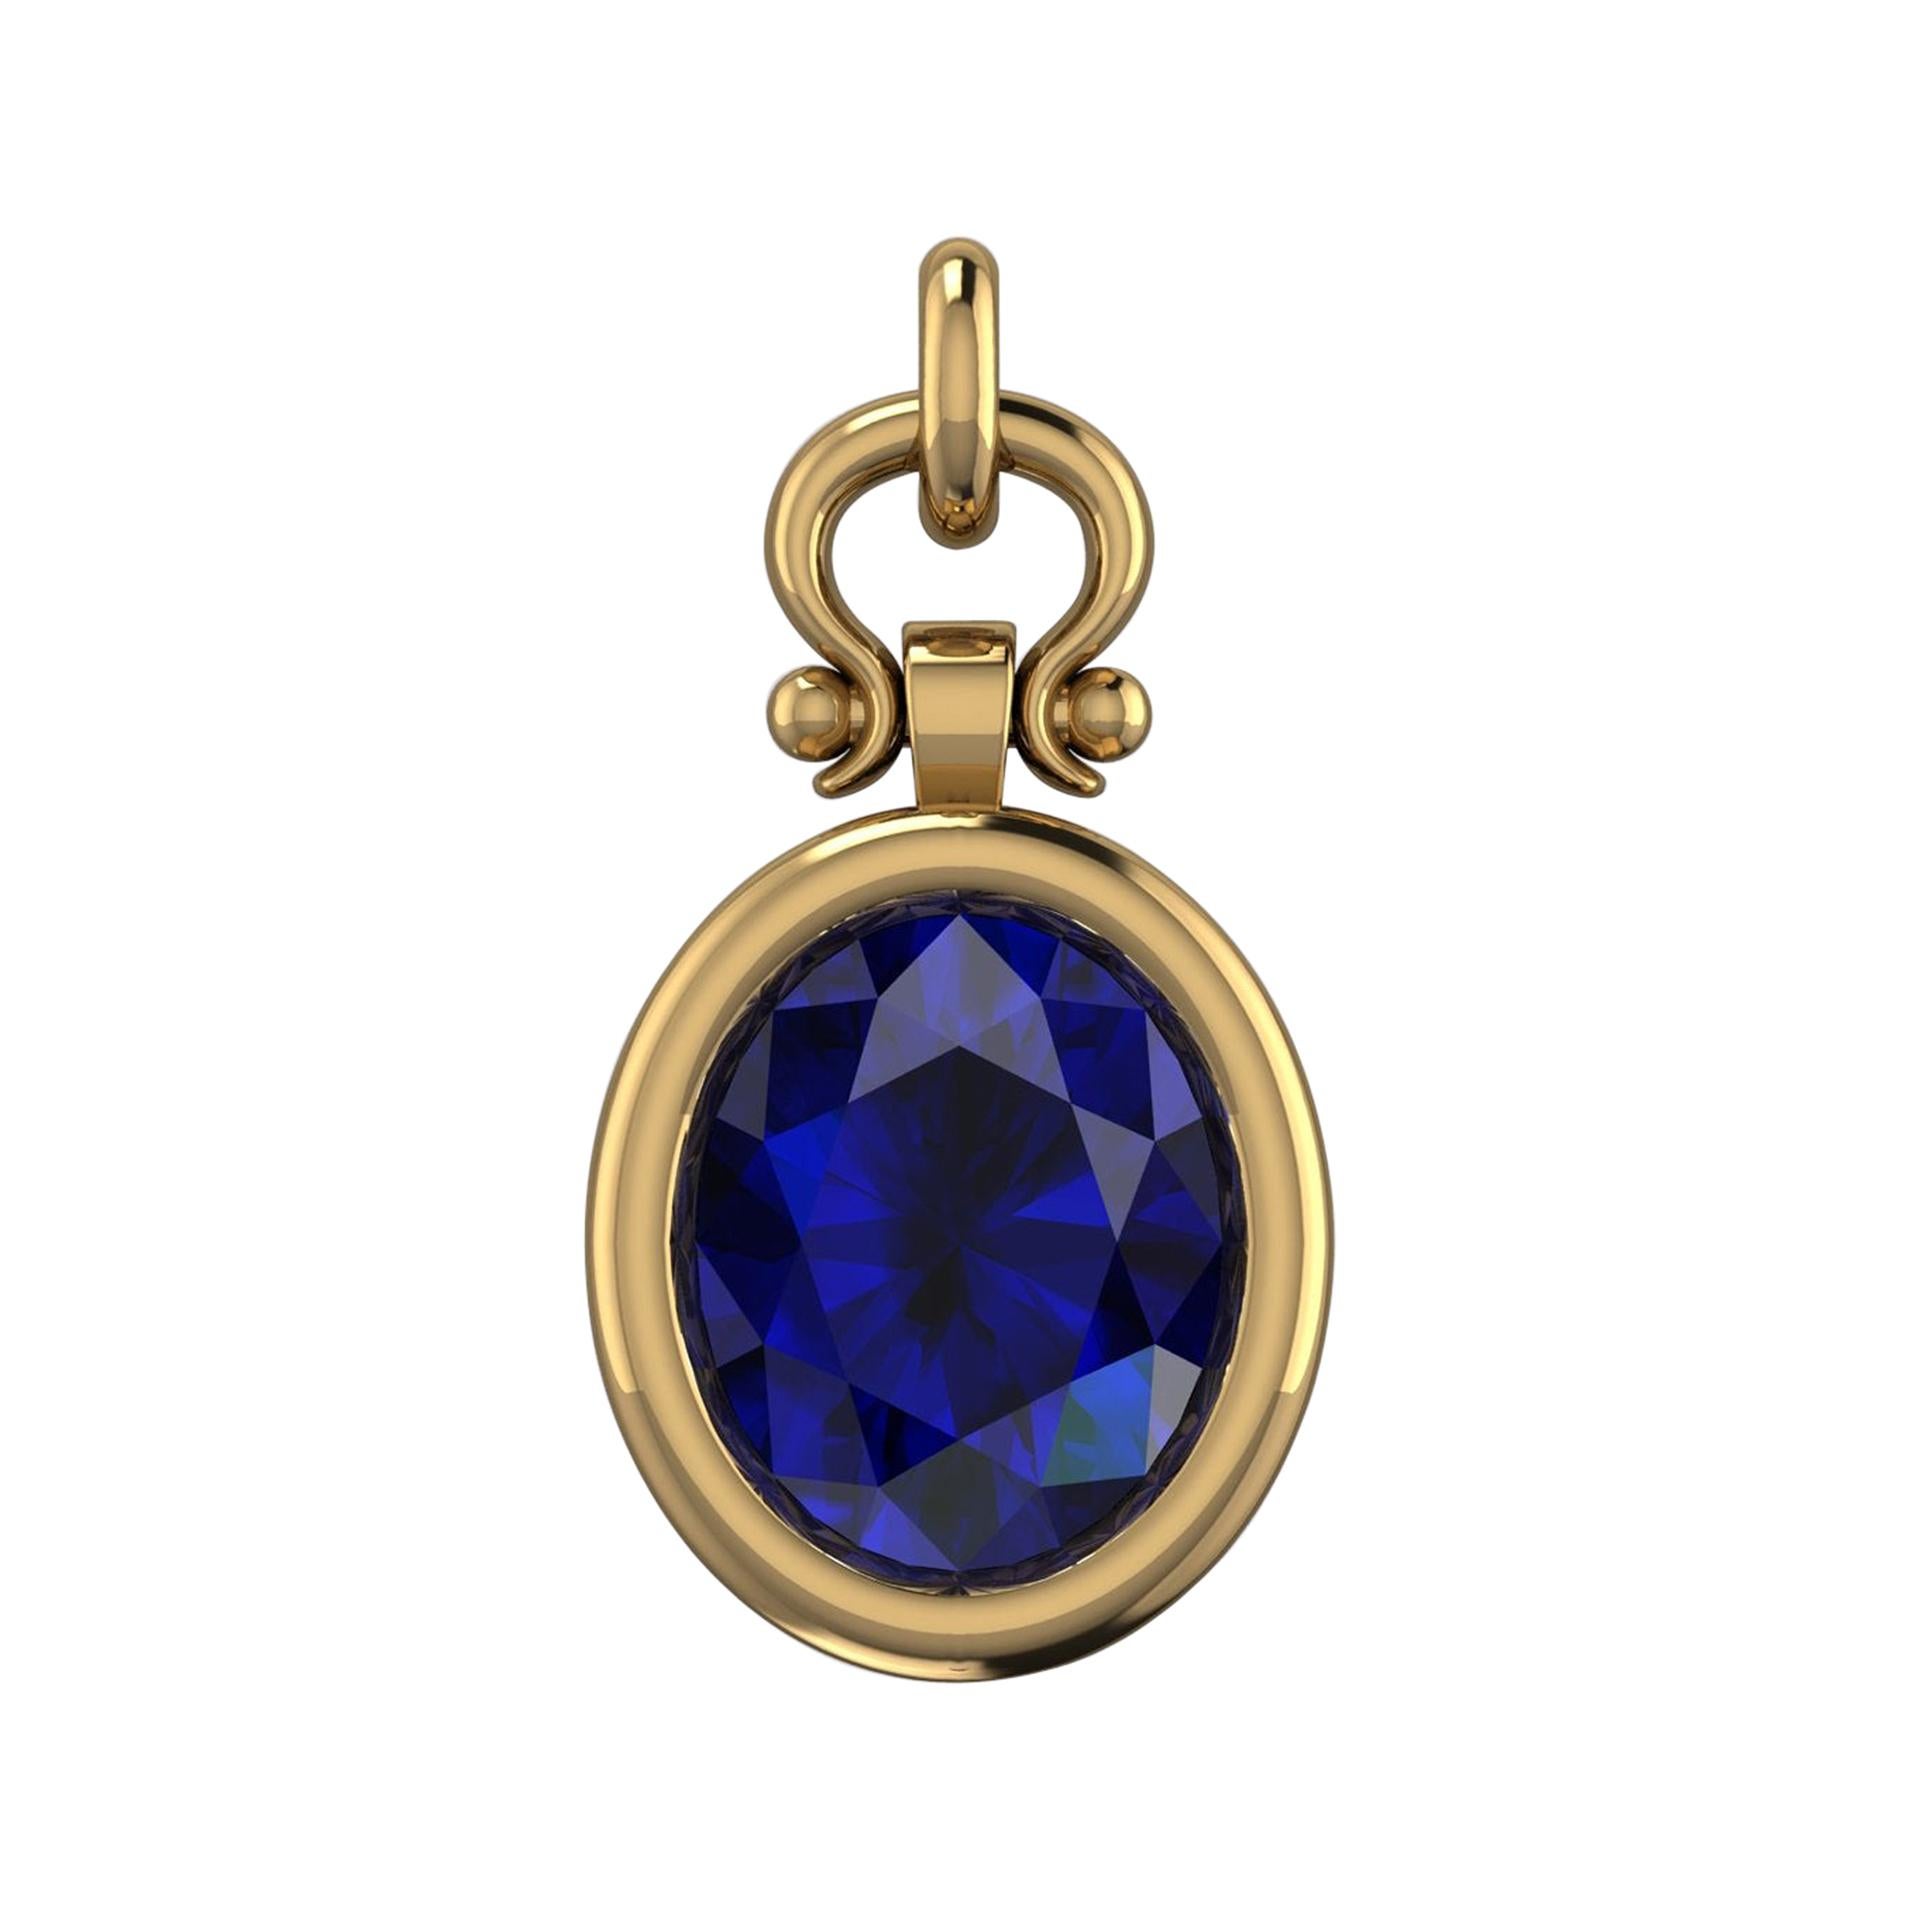 Collier pendentif en or 18 carats avec saphir bleu taille ovale certifié Berberyn de 2,64 carats